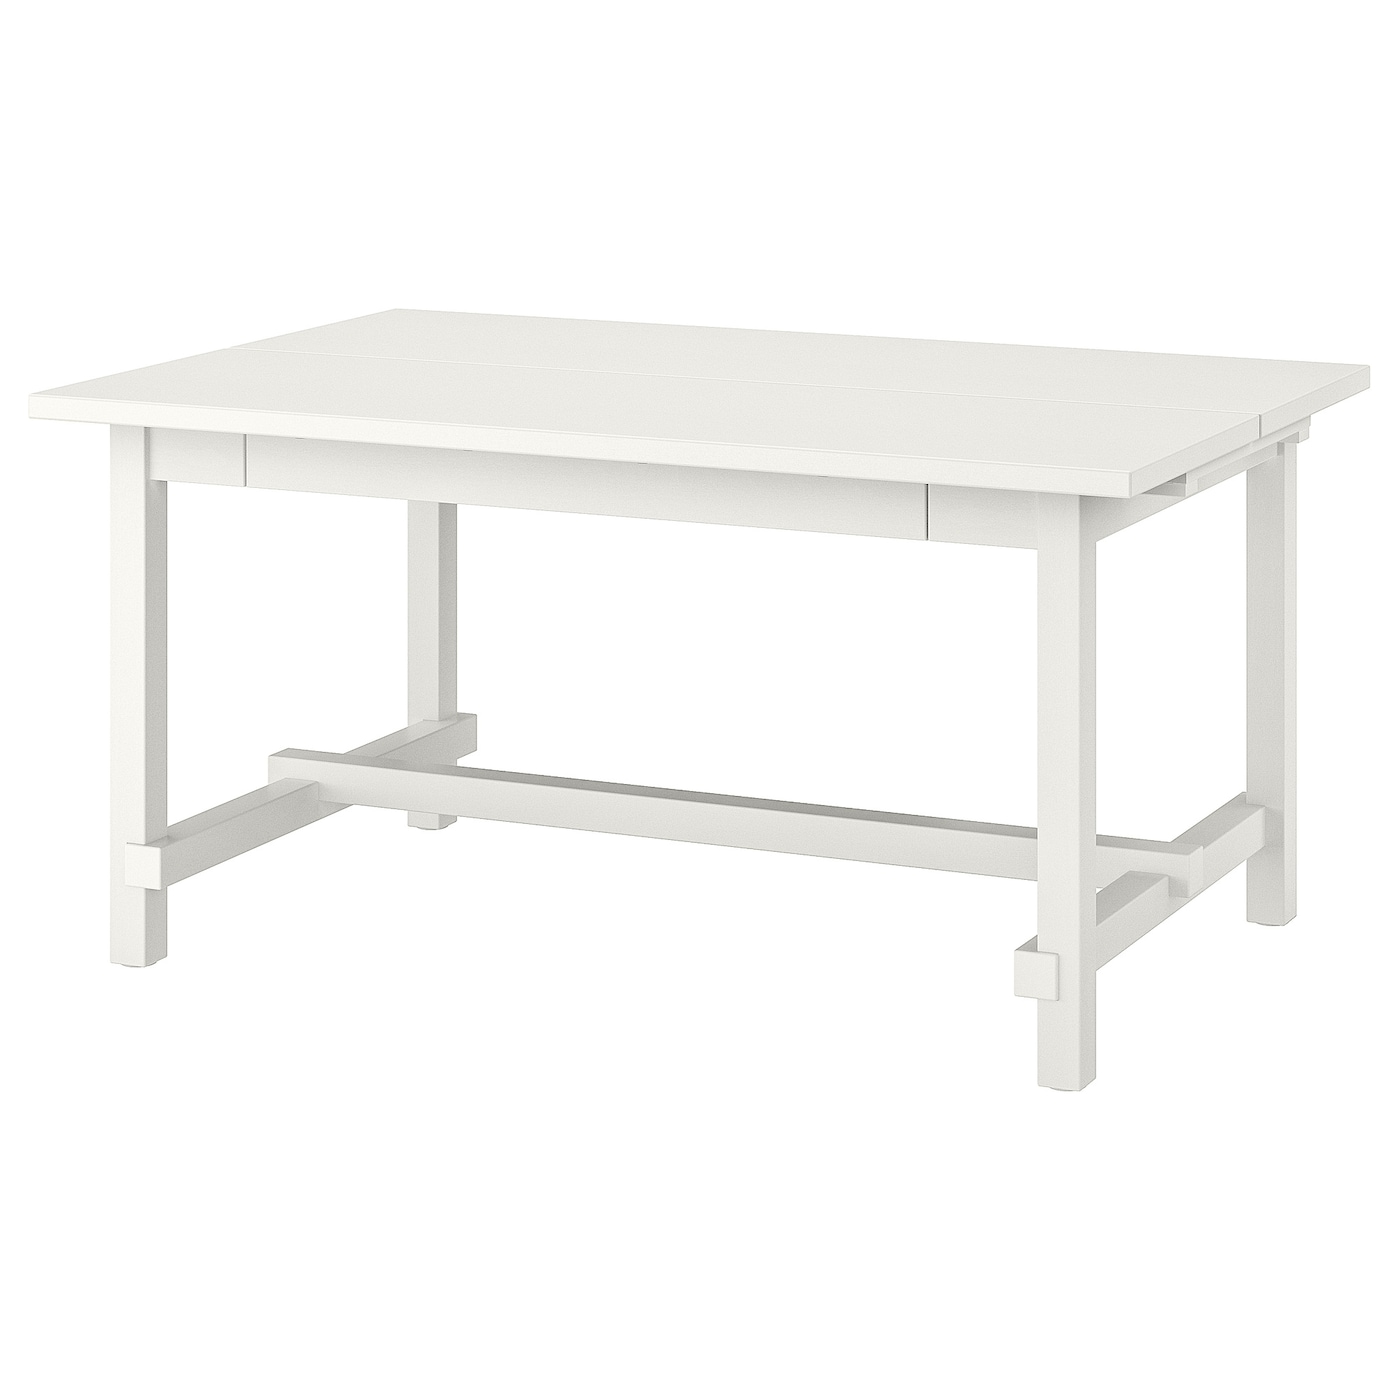 Раздвижной обеденный стол - IKEA NORDVIKEN/НОРДВКЕН ИКЕА, 75х152/223х105 см, белый